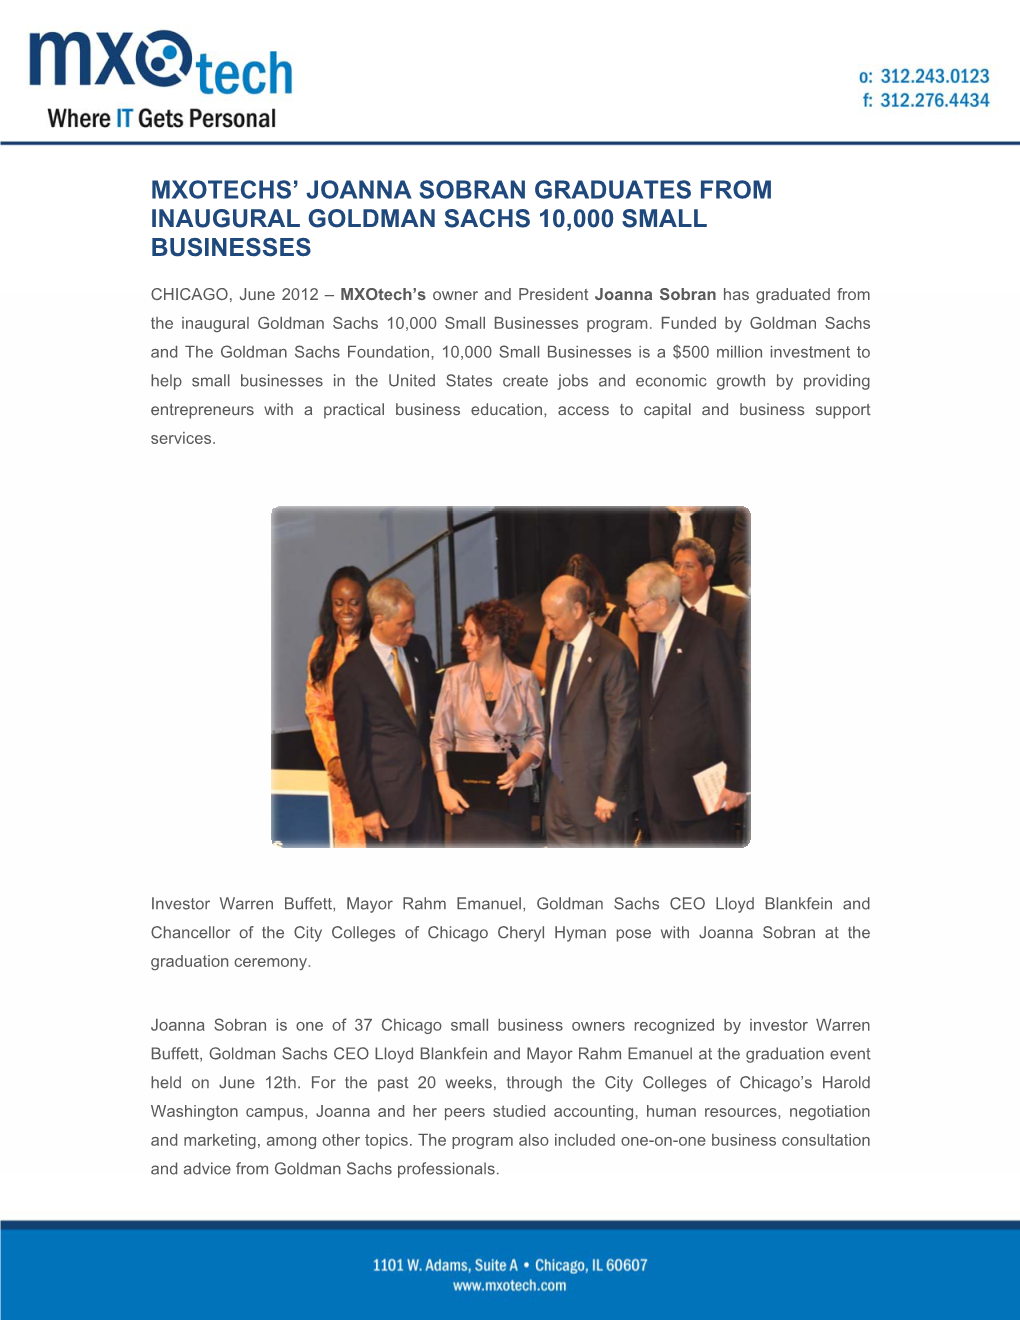 Mxotechs' Joanna Sobran Graduates from Inaugural